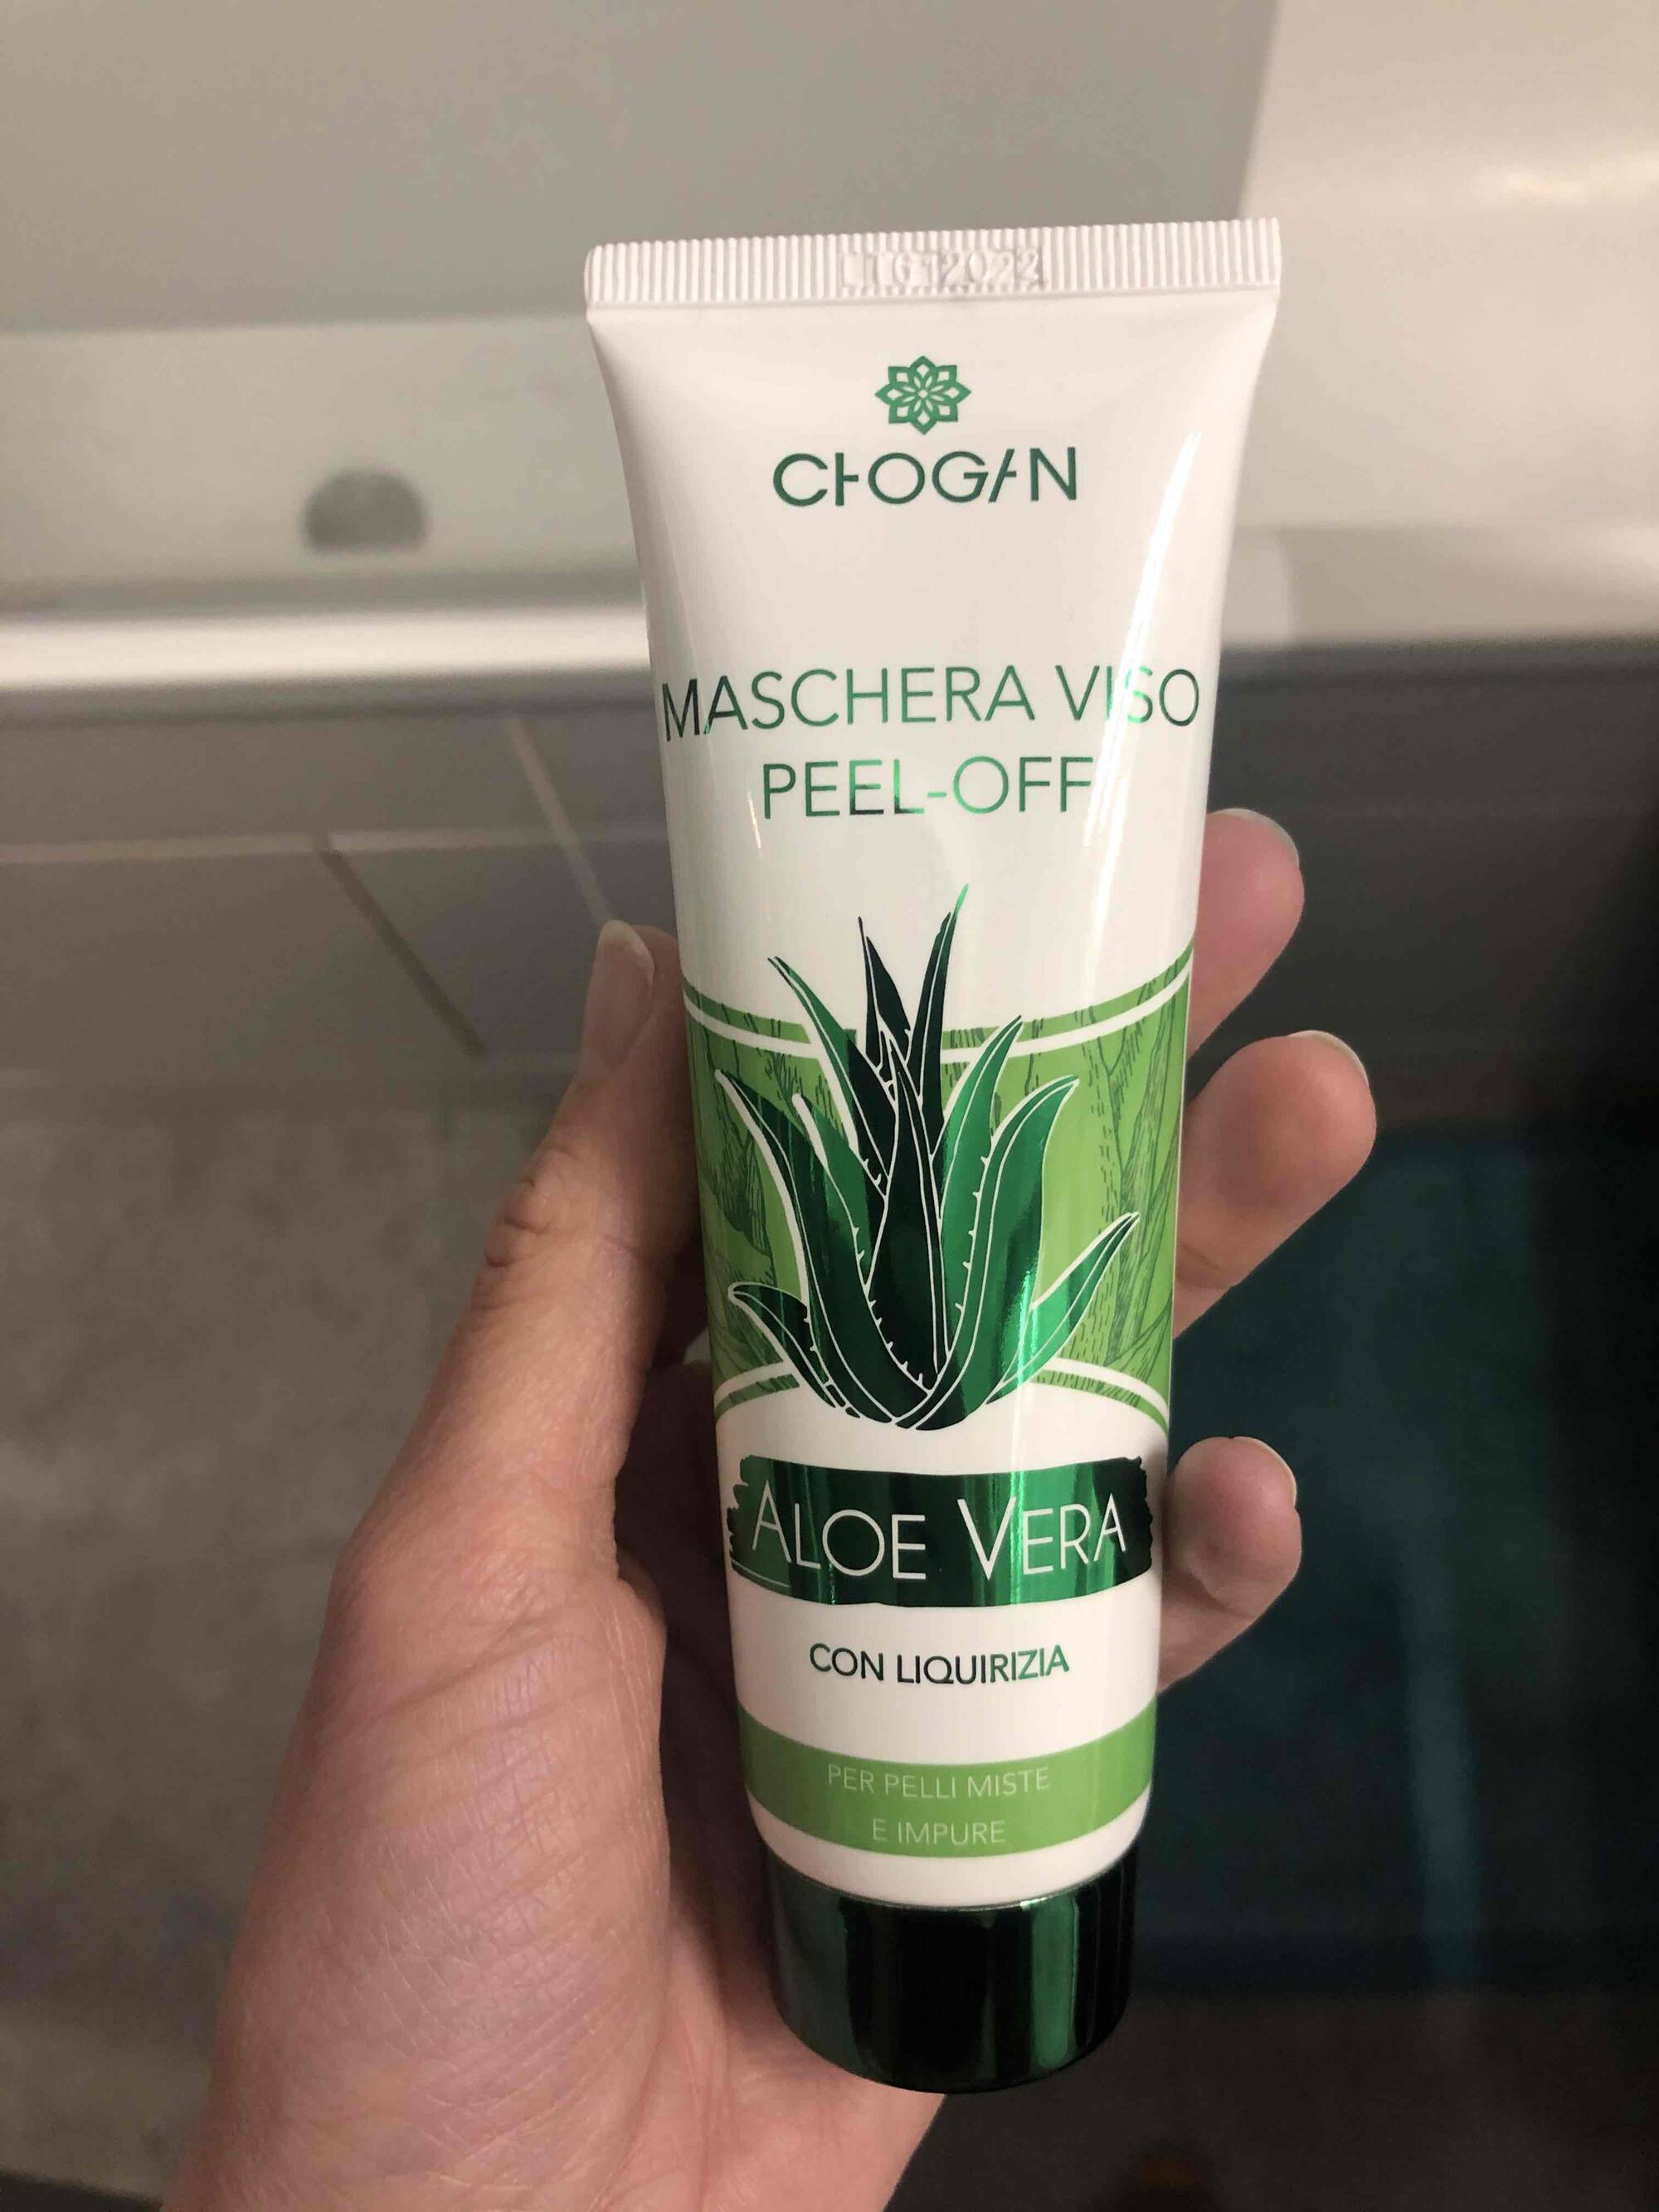 CHOGAN - Aloe vera - Maschera viso peel-off